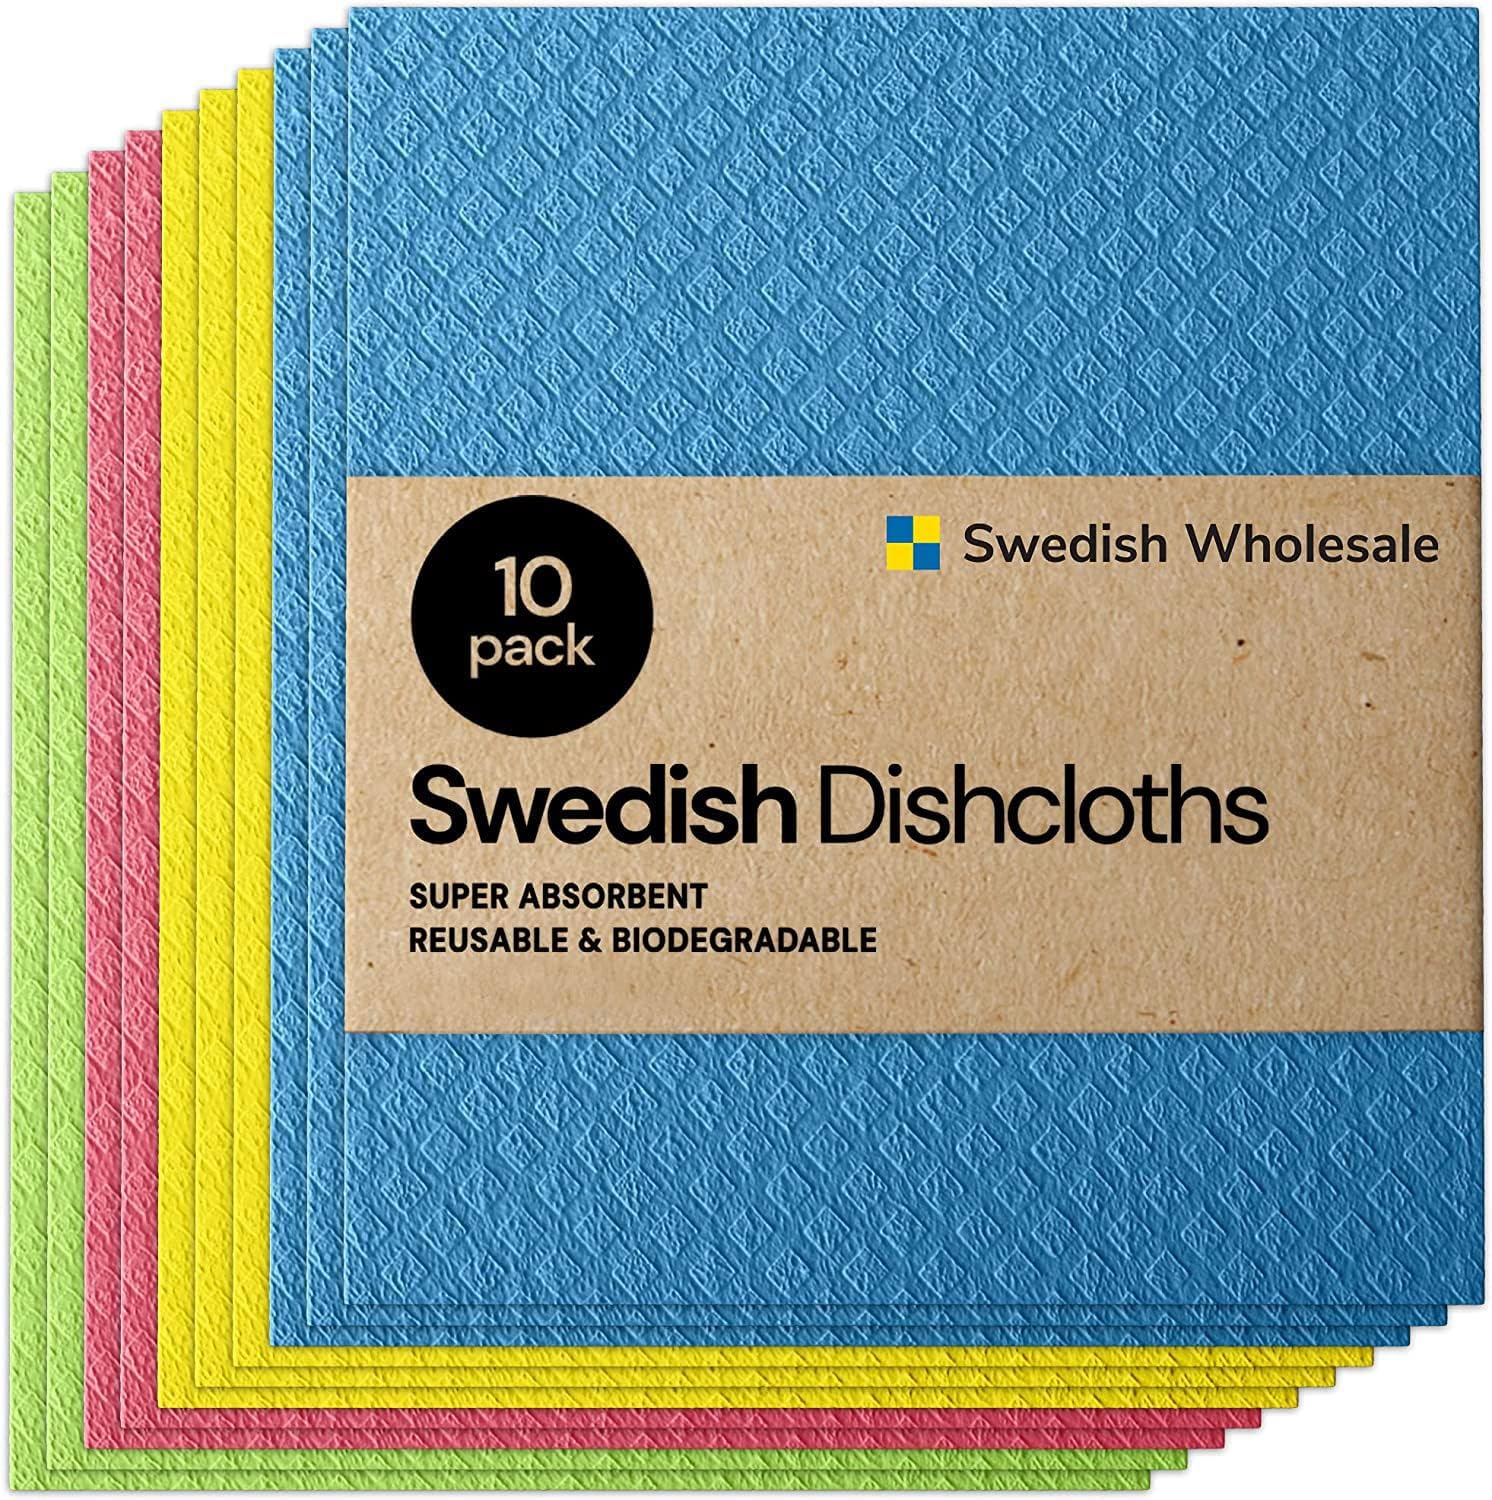 swedish wholesale swedish dishcloths for kitchen 10 pack reusable paper towels washable eco friendly cellulose sponge mi